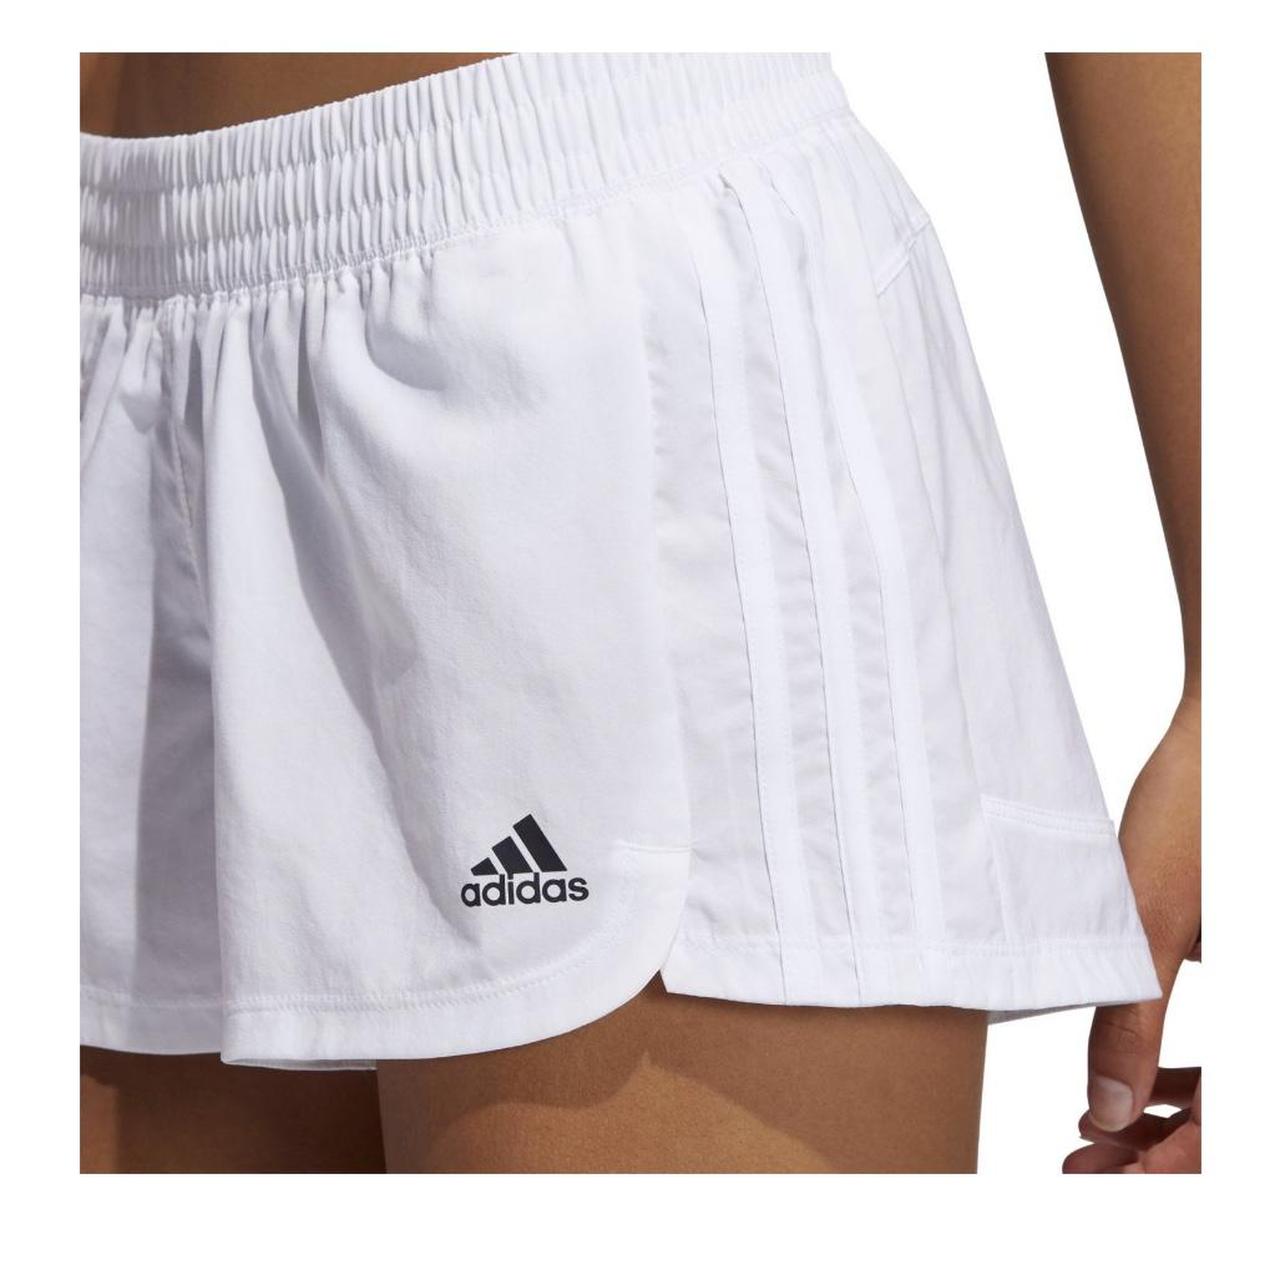 Adidas Women's White Shorts (4)